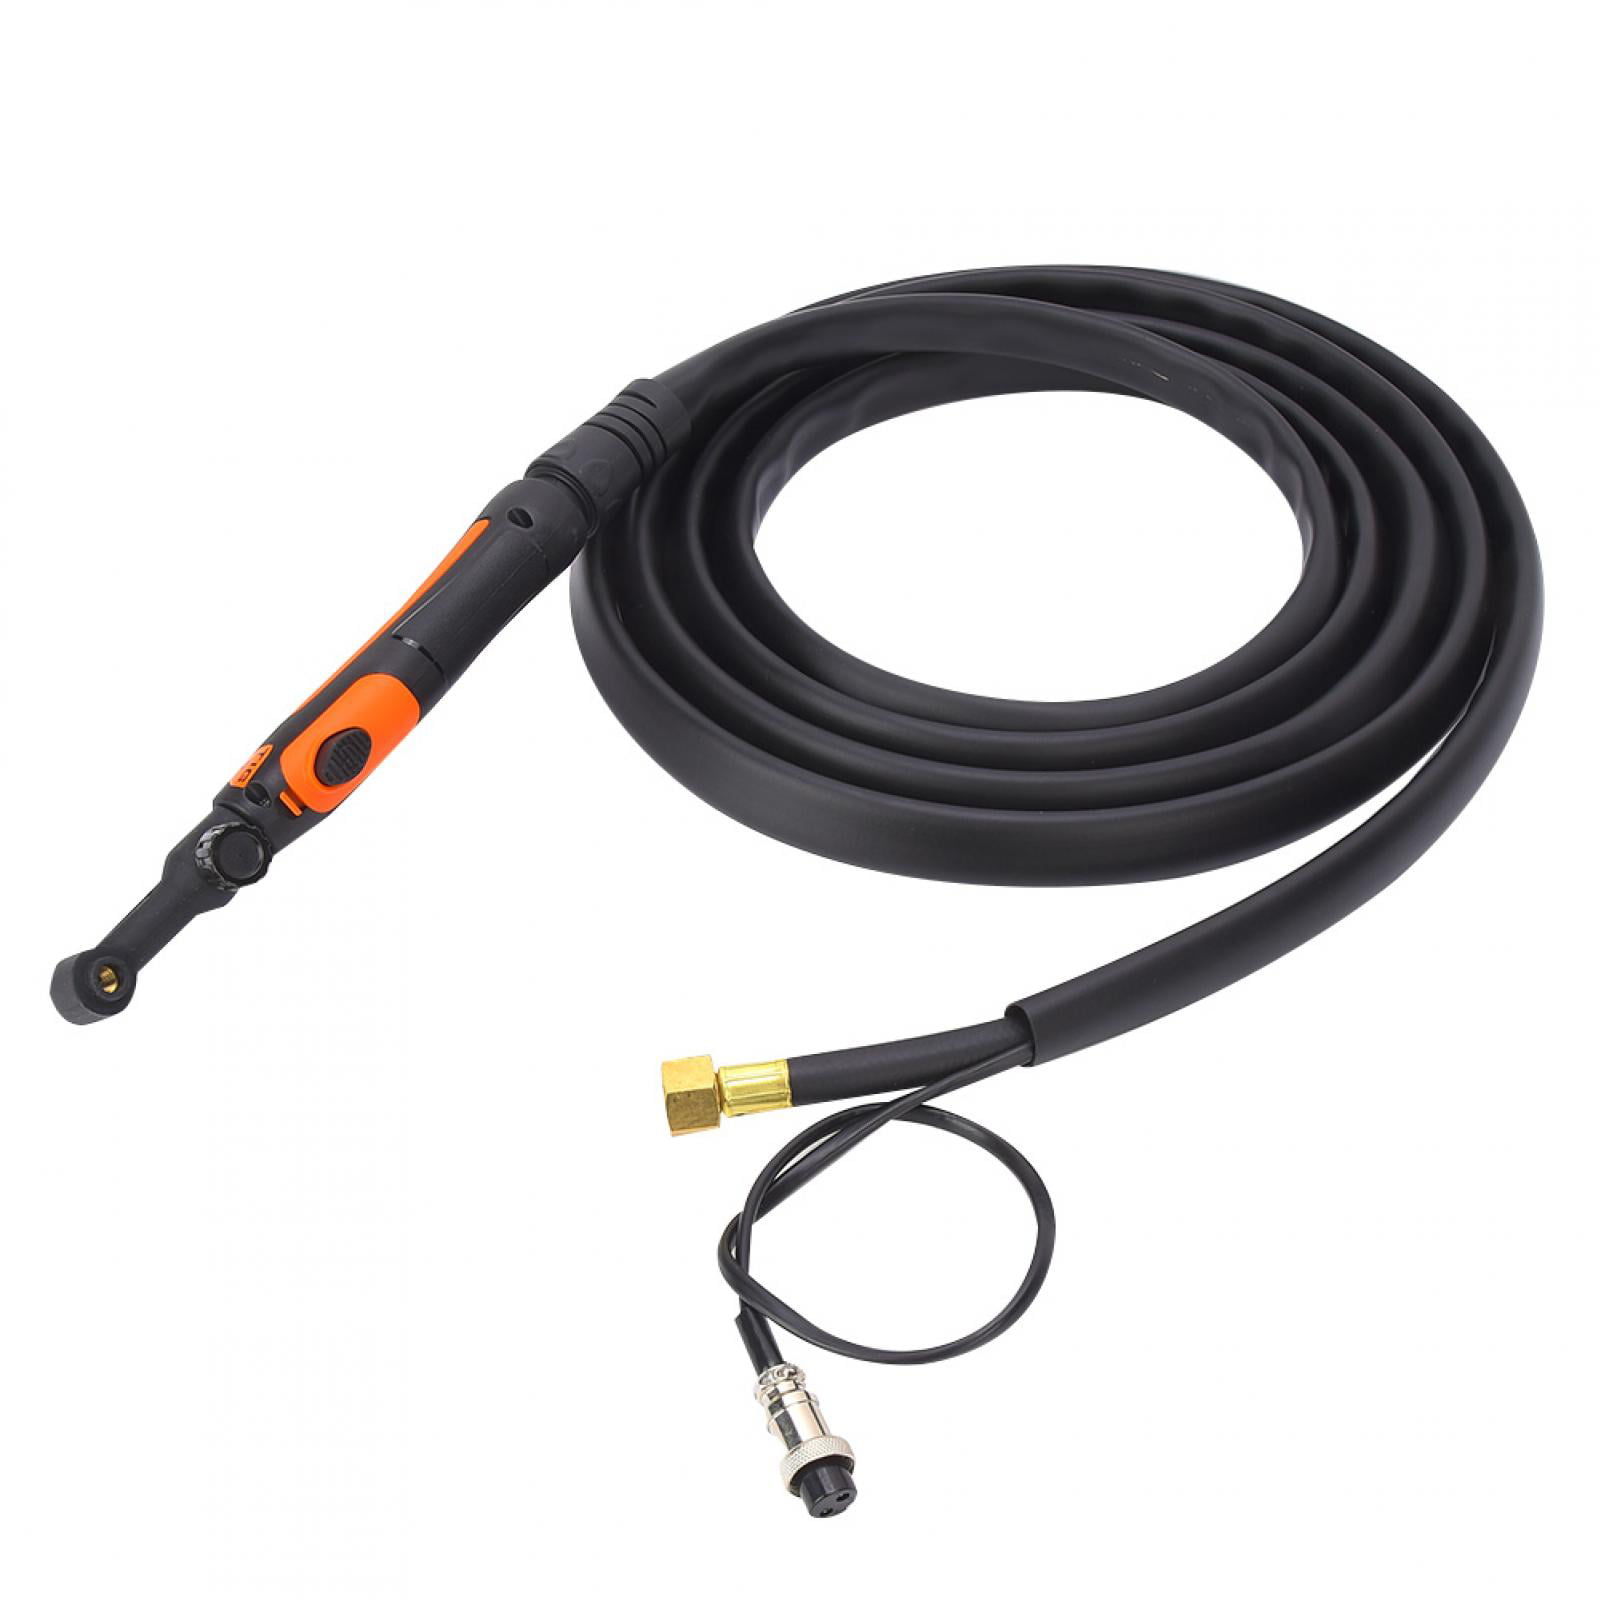 8mm² Wire Flexible Valve Head 4m Line Tungsten Arc Welding Torch for Automotive Industry Car Maintenance TIG Welding Torch M16x1.5 Inlet Arc Welding Kit 